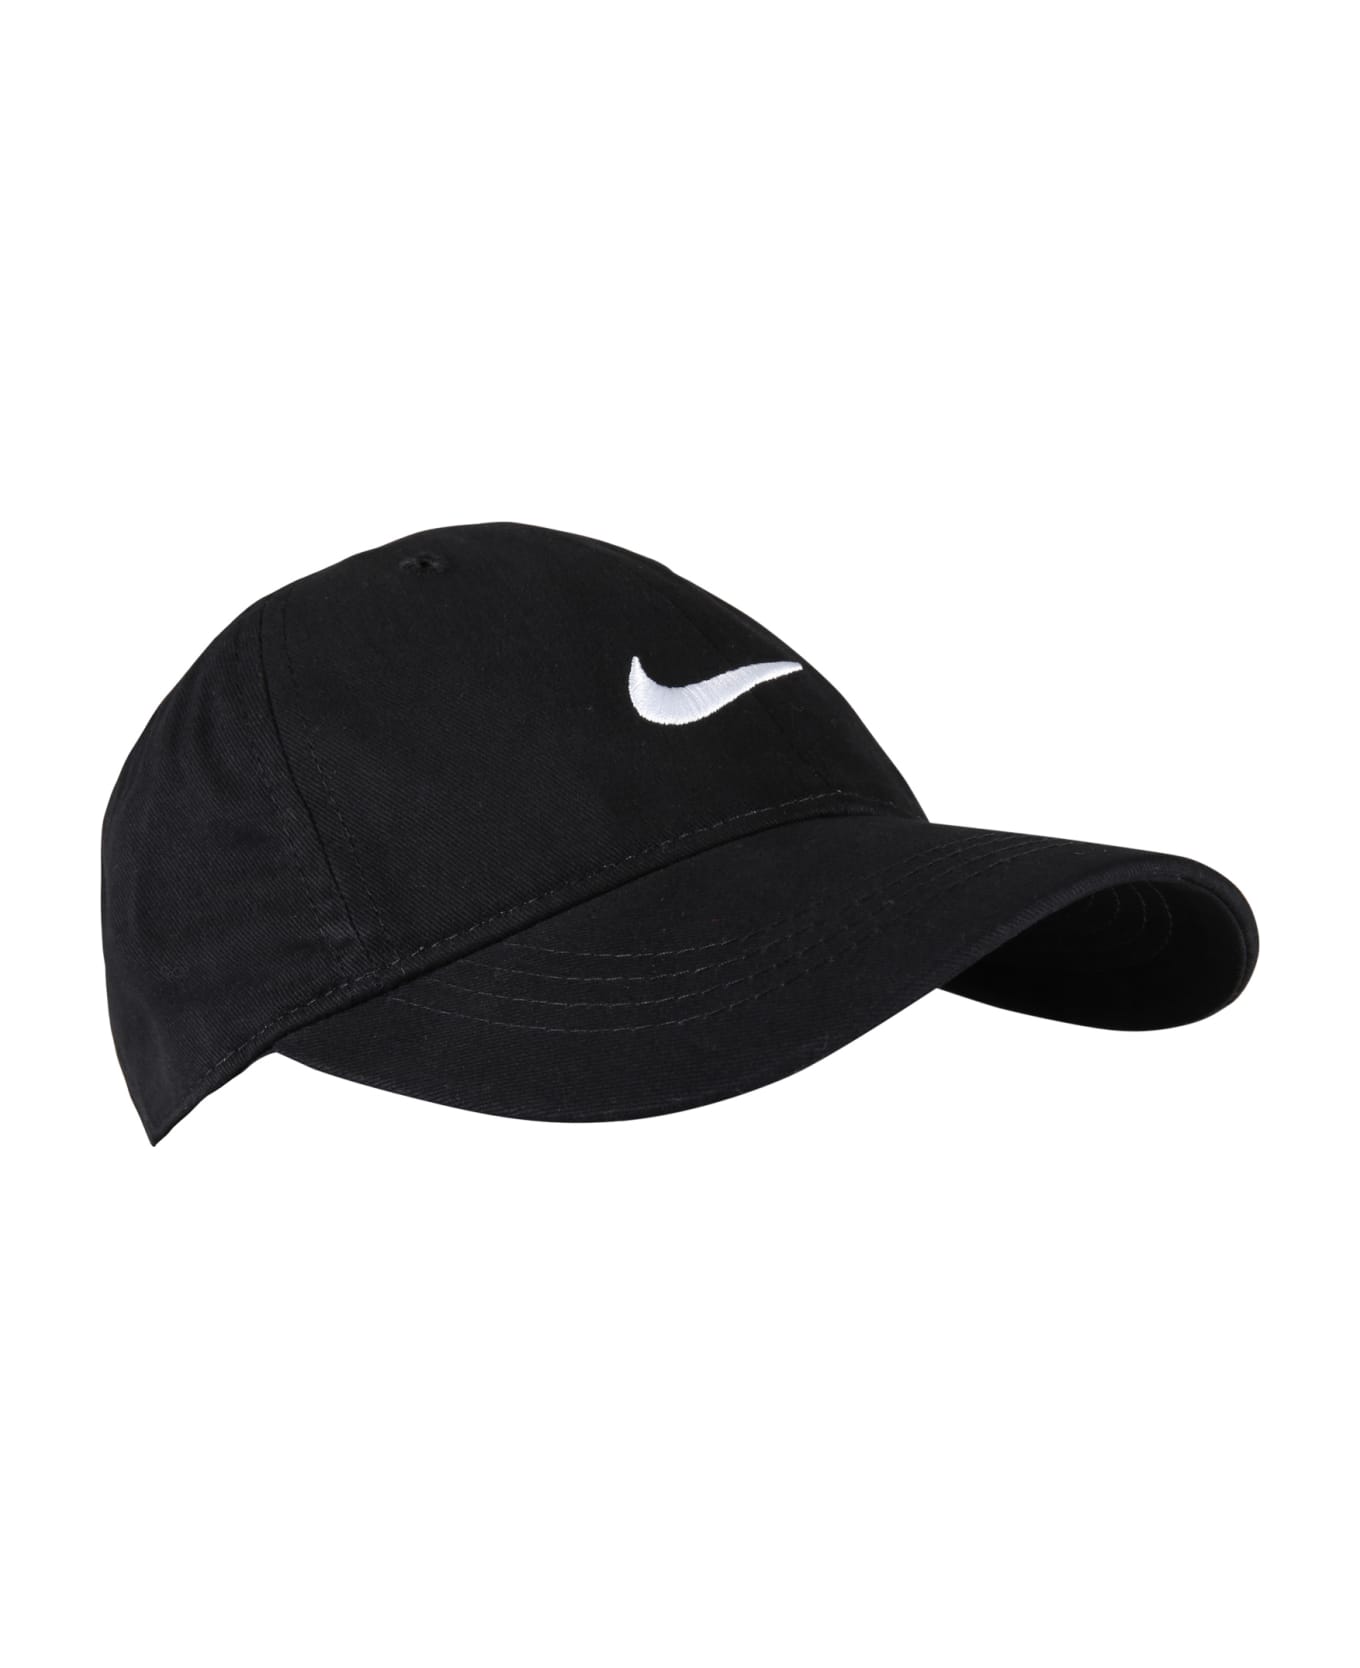 Nike Black Hat For Kids - Black